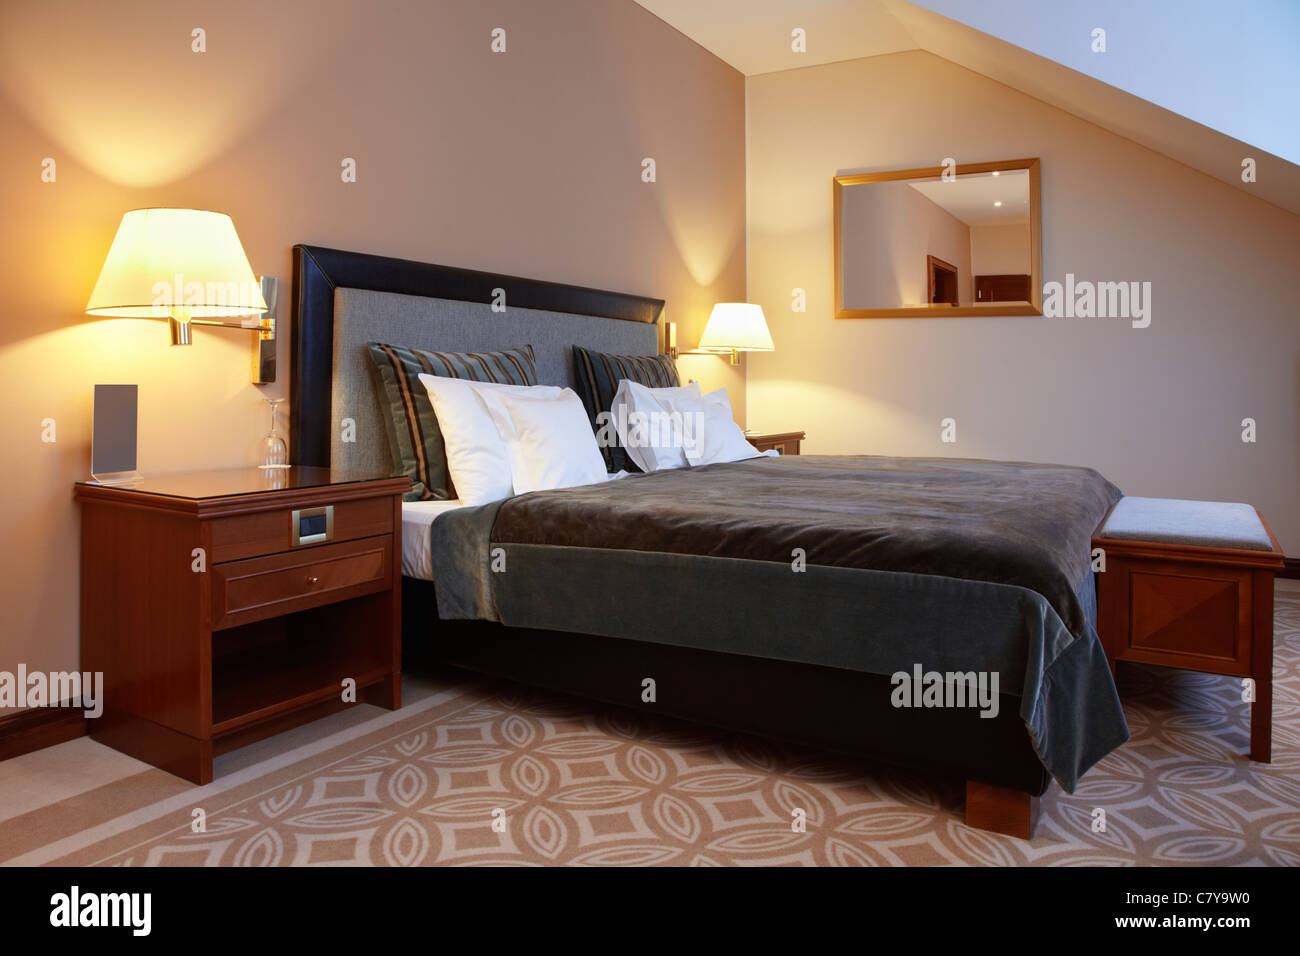 Hotel room interior, double bedroom Stock Photo